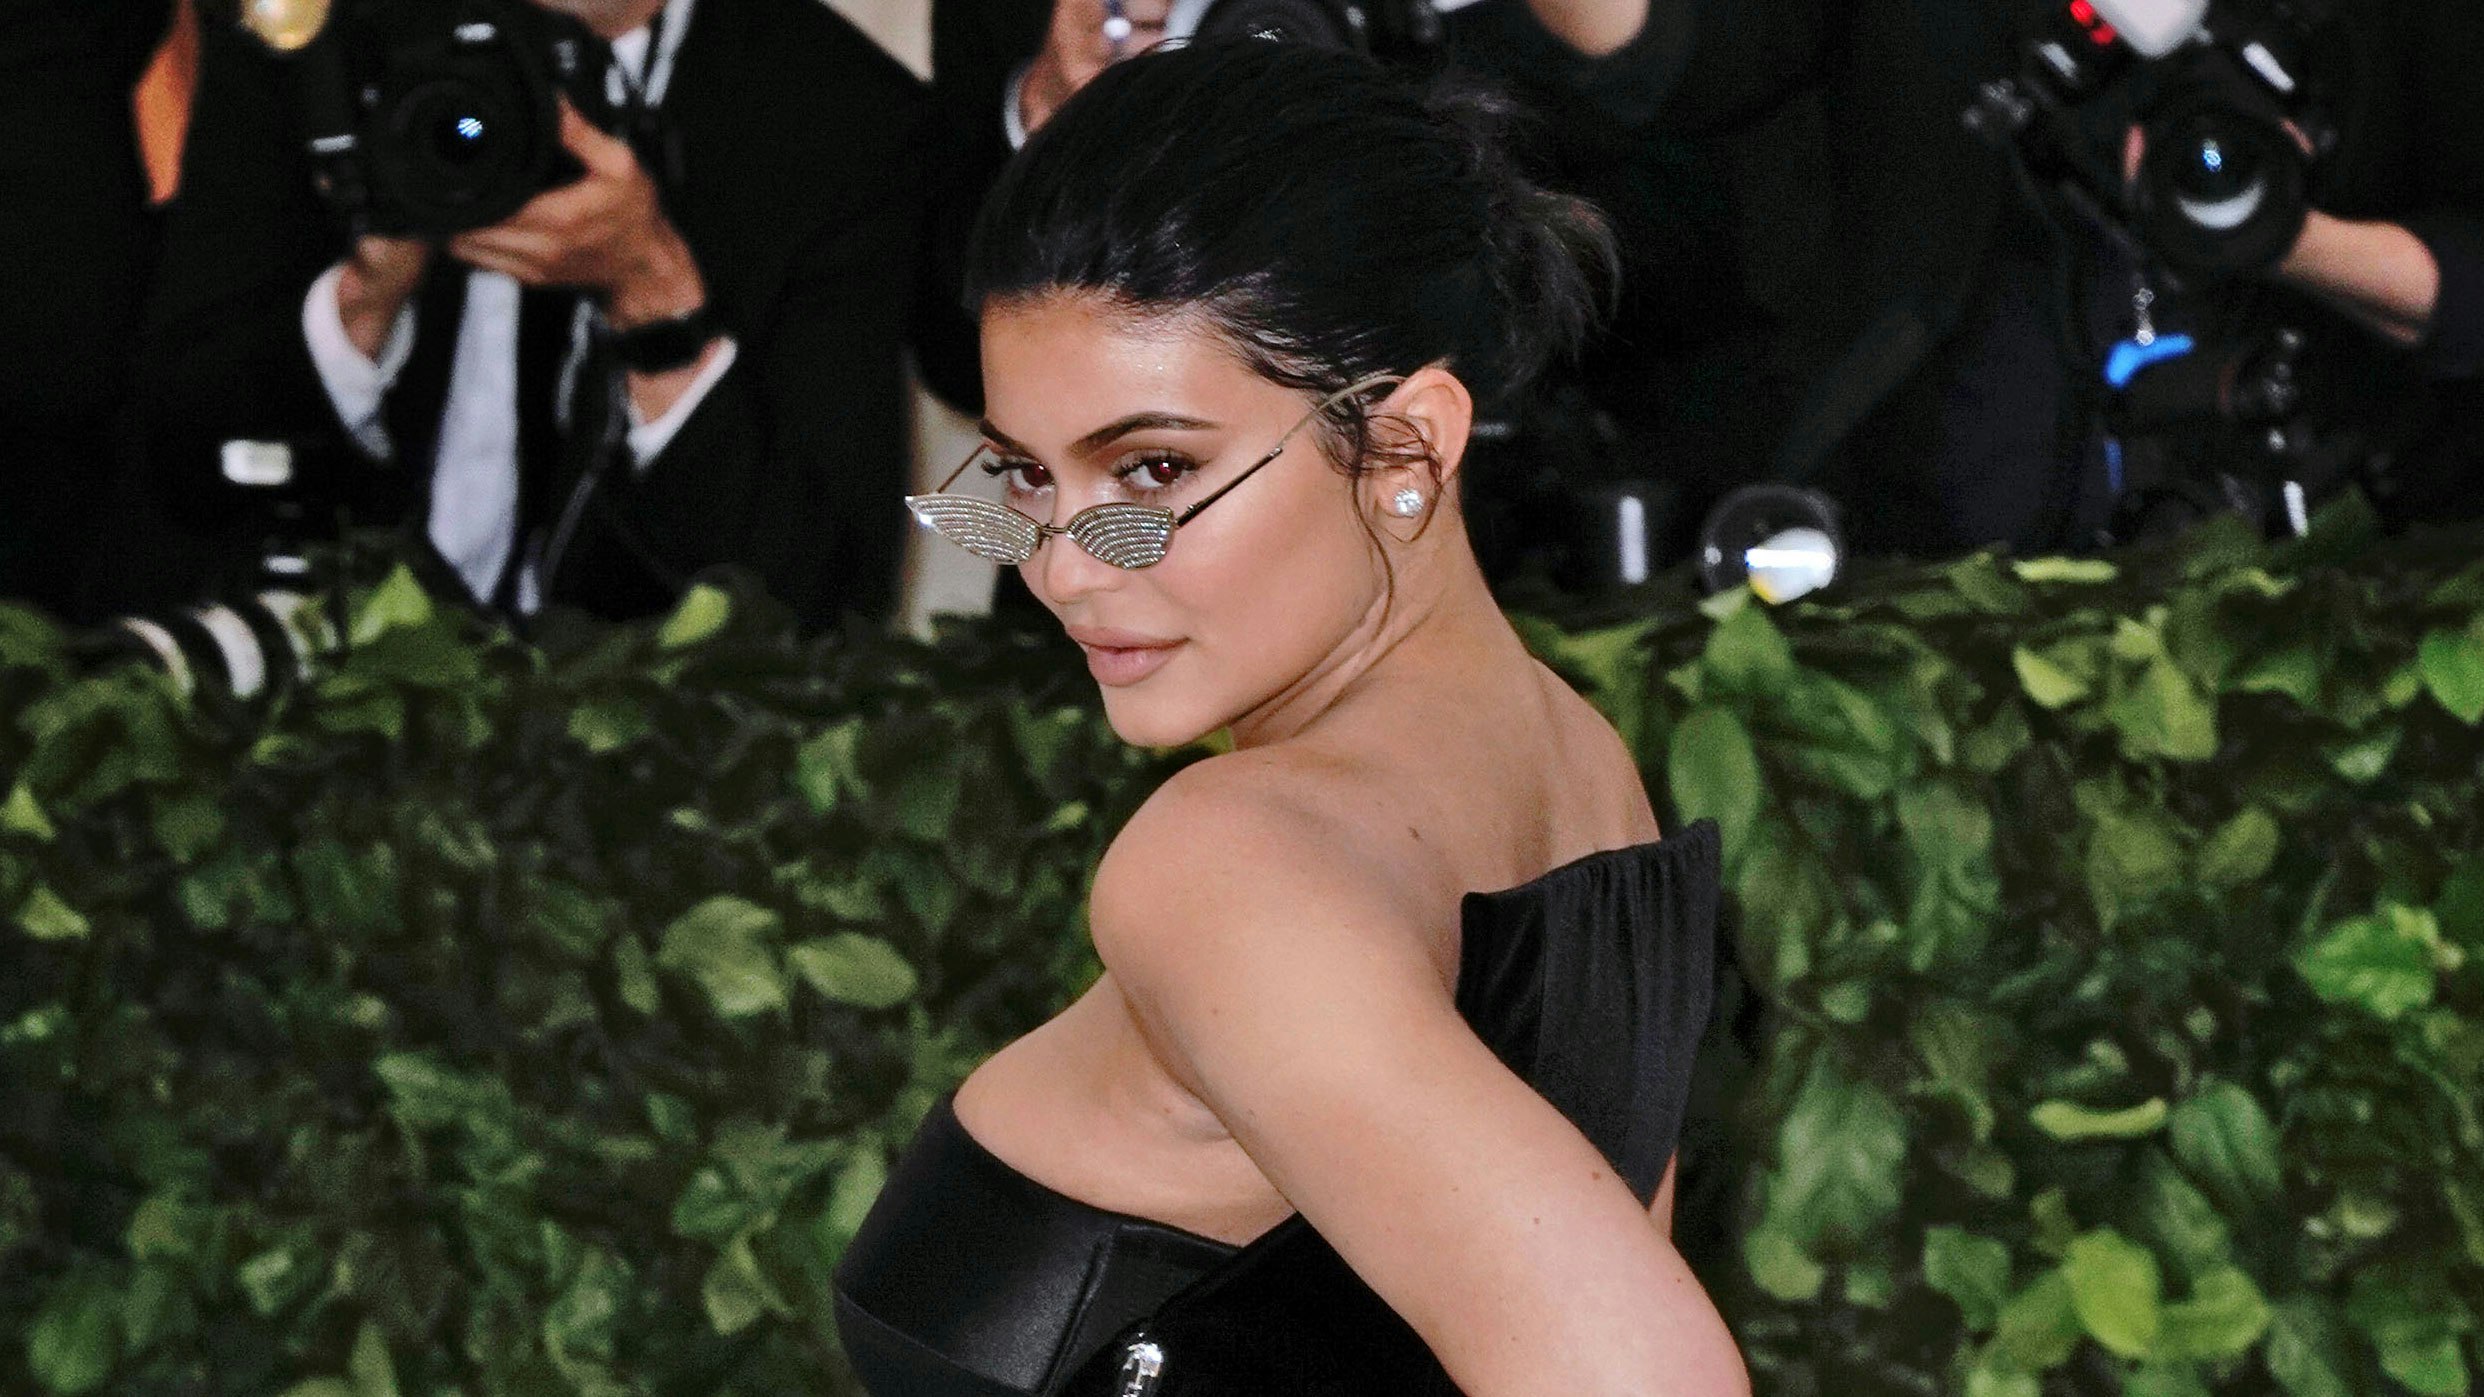 Kylie Jenner Wears a Black Satin Balconette Bra on Instagram